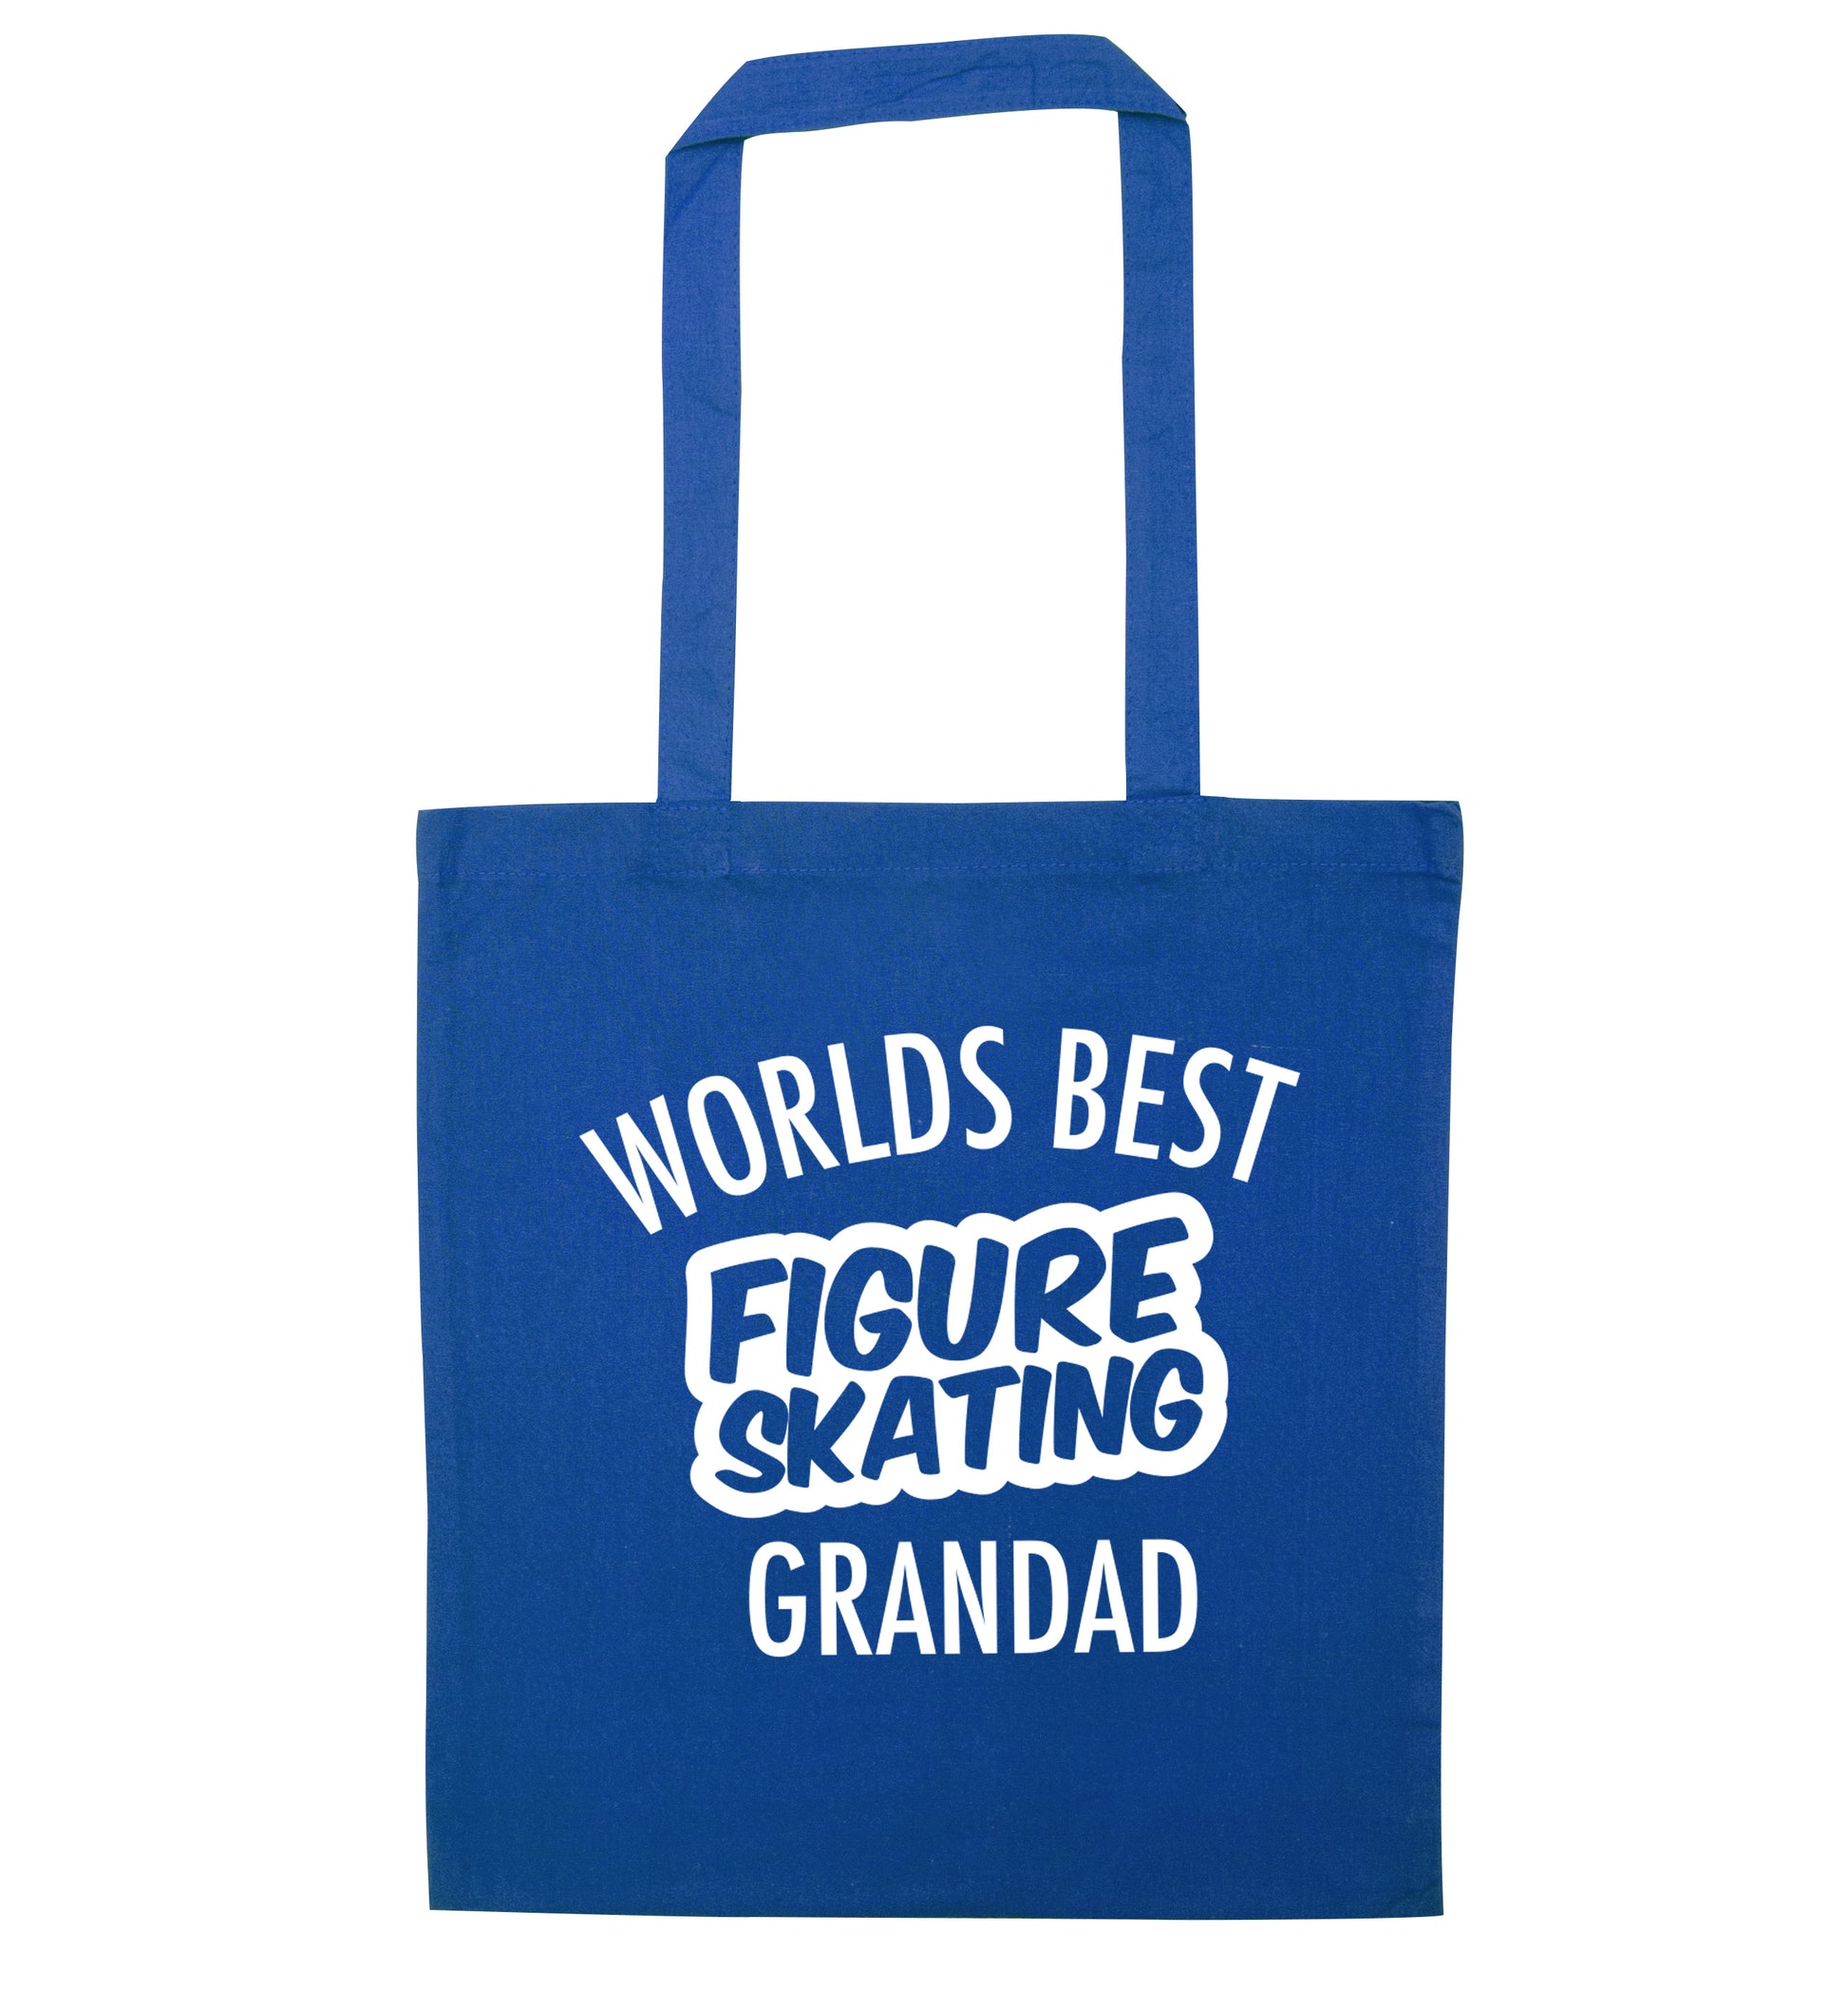 Worlds best figure skating grandad blue tote bag